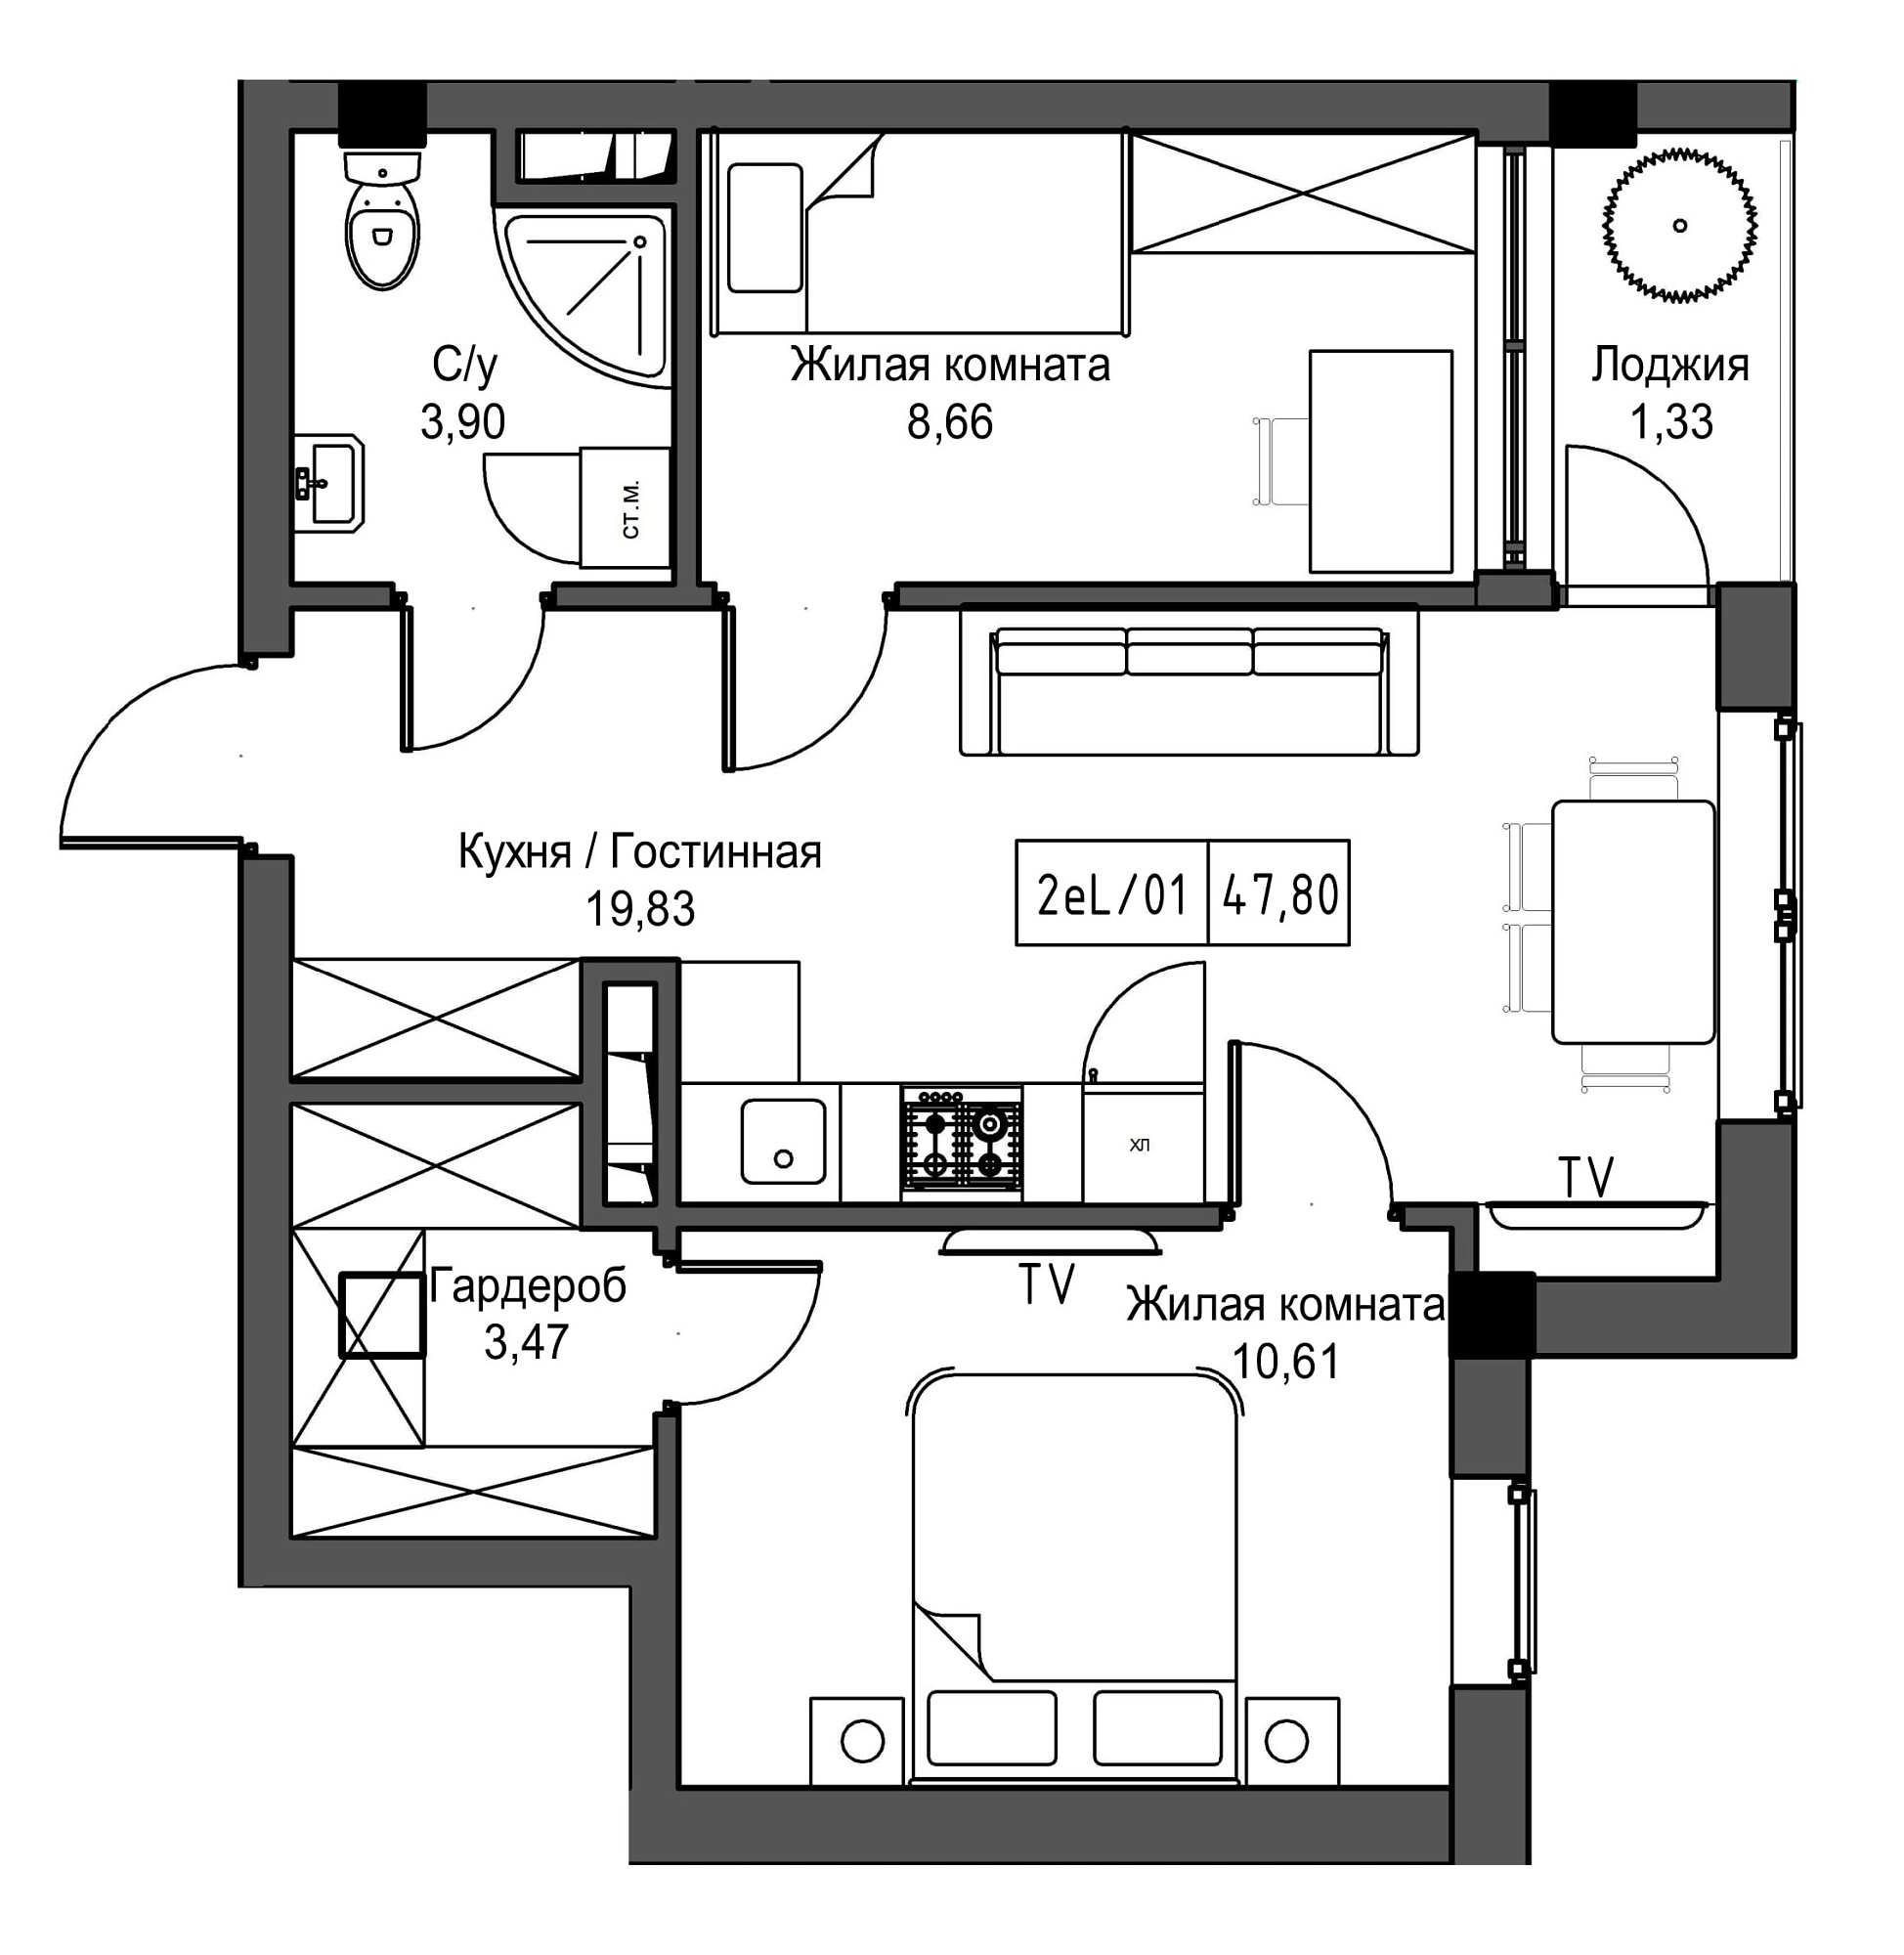 Planning 2-rm flats area 47.8m2, UM-002-07/0062.